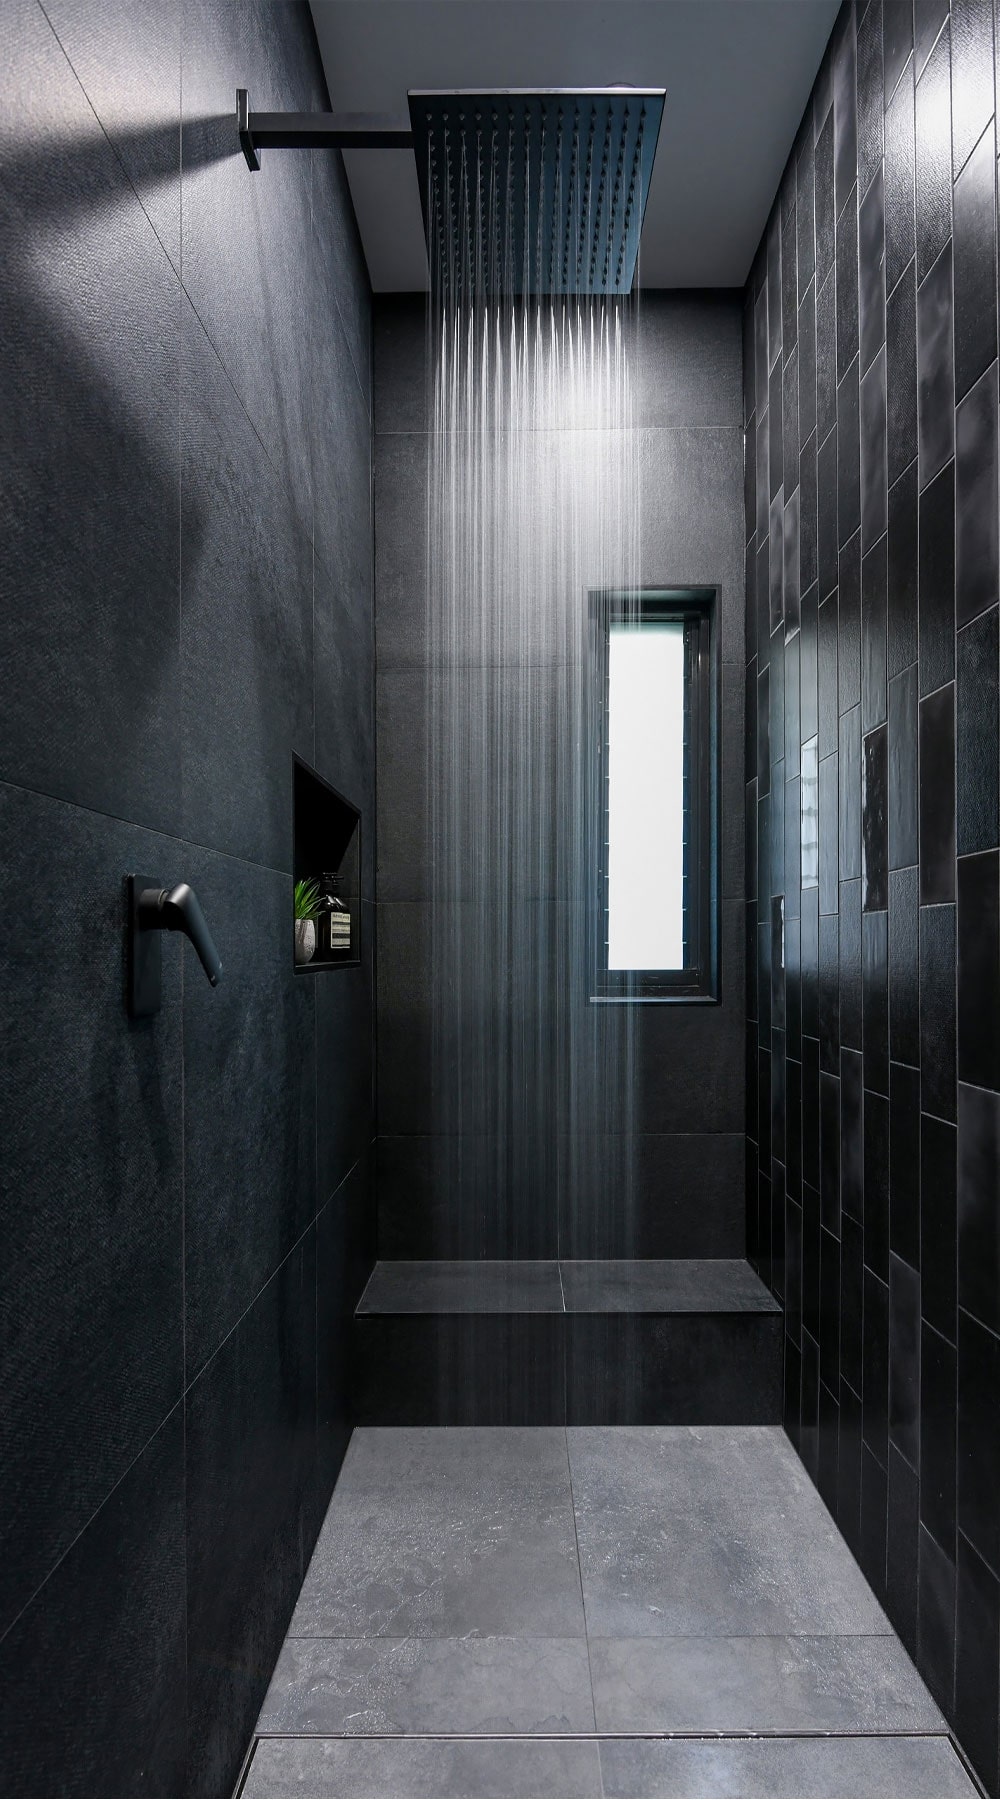 Black Theme for the Bathroom Walls